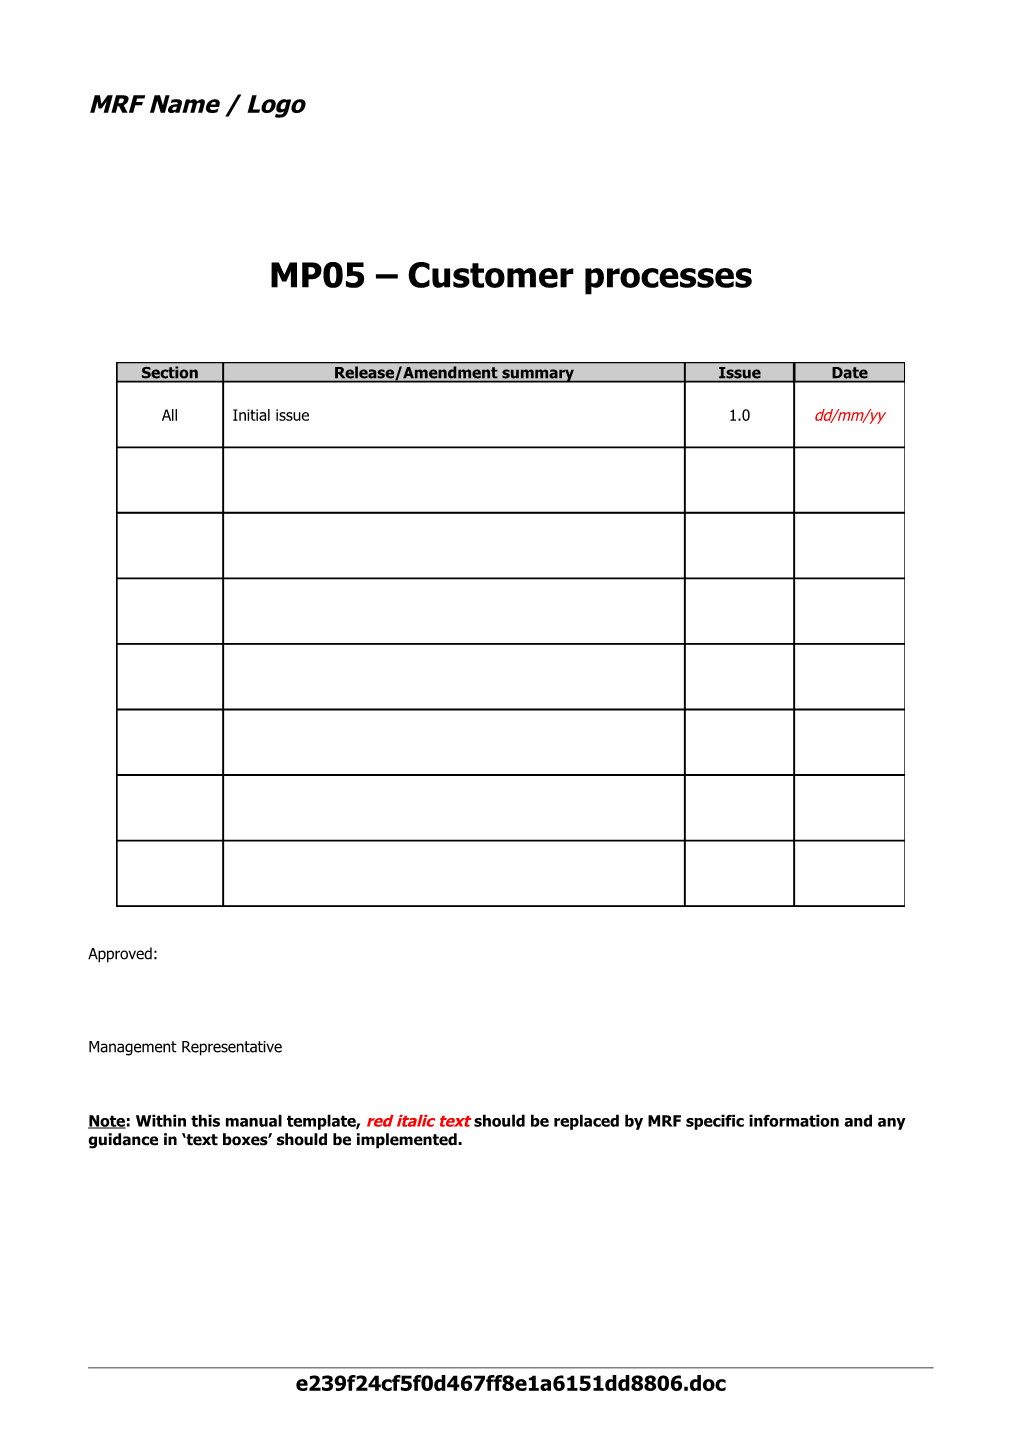 MP05 Customer Processes